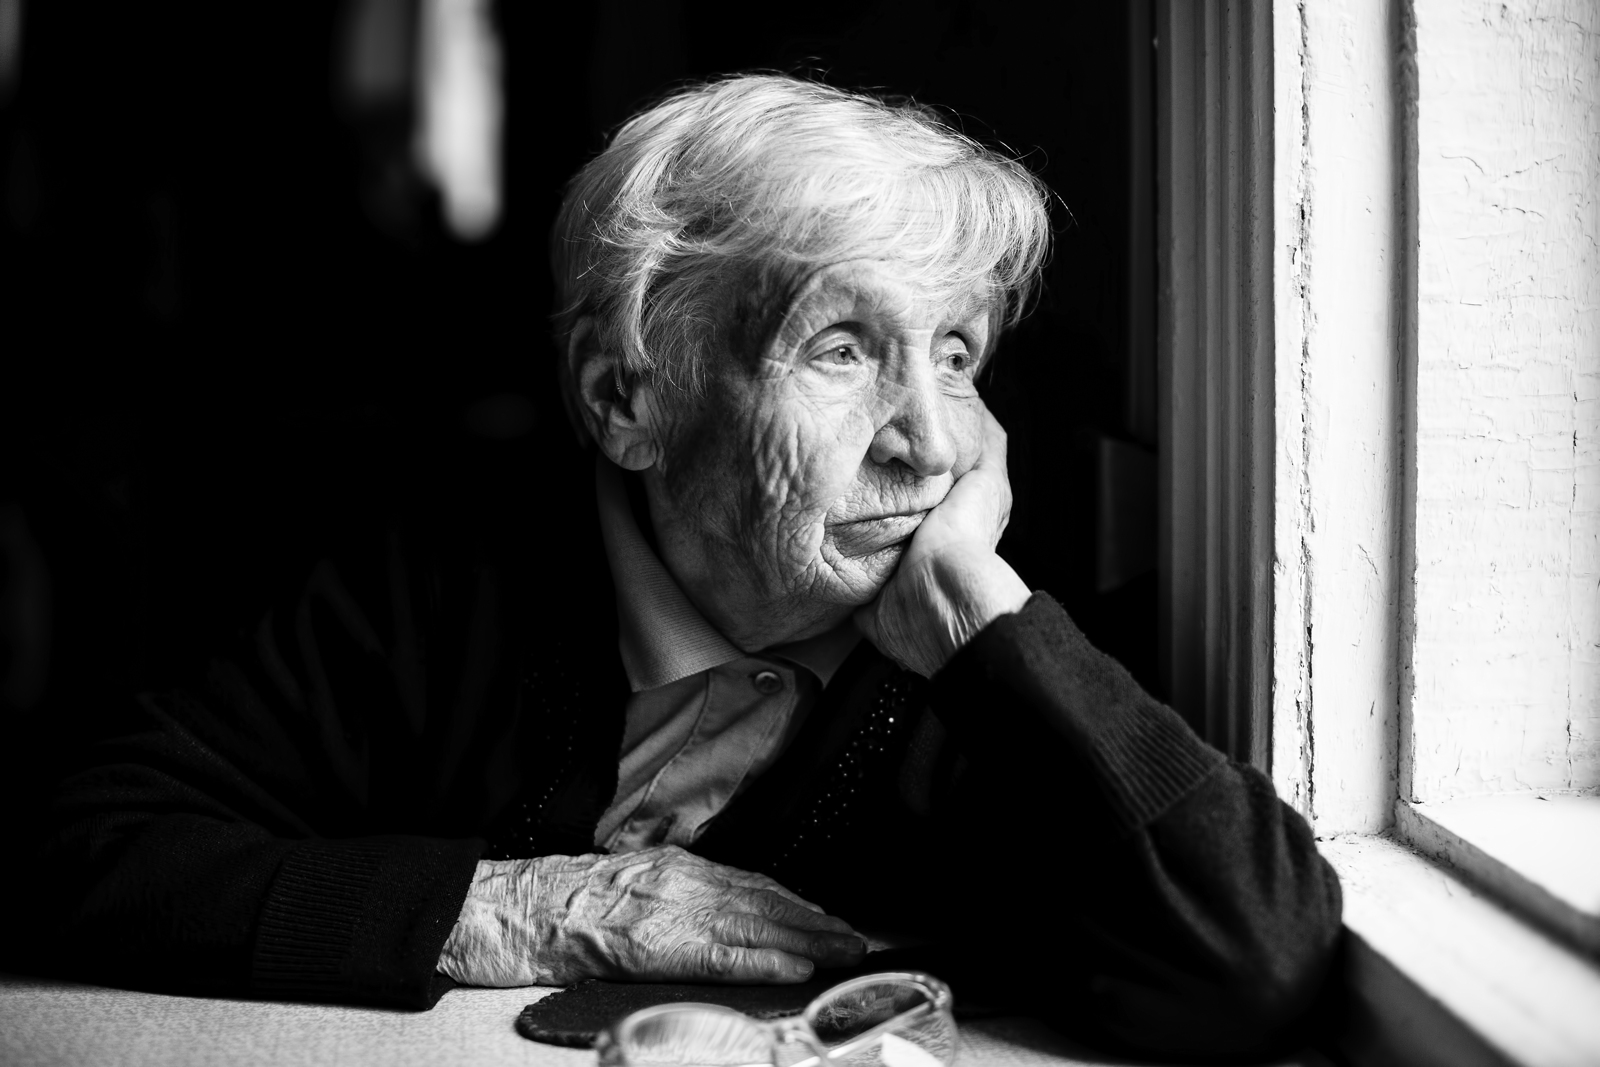 https://www.sagepointcare.org/wp-content/uploads/2016/12/bigstock-Elderly-woman-sadly-looking-ou-156375827.jpg